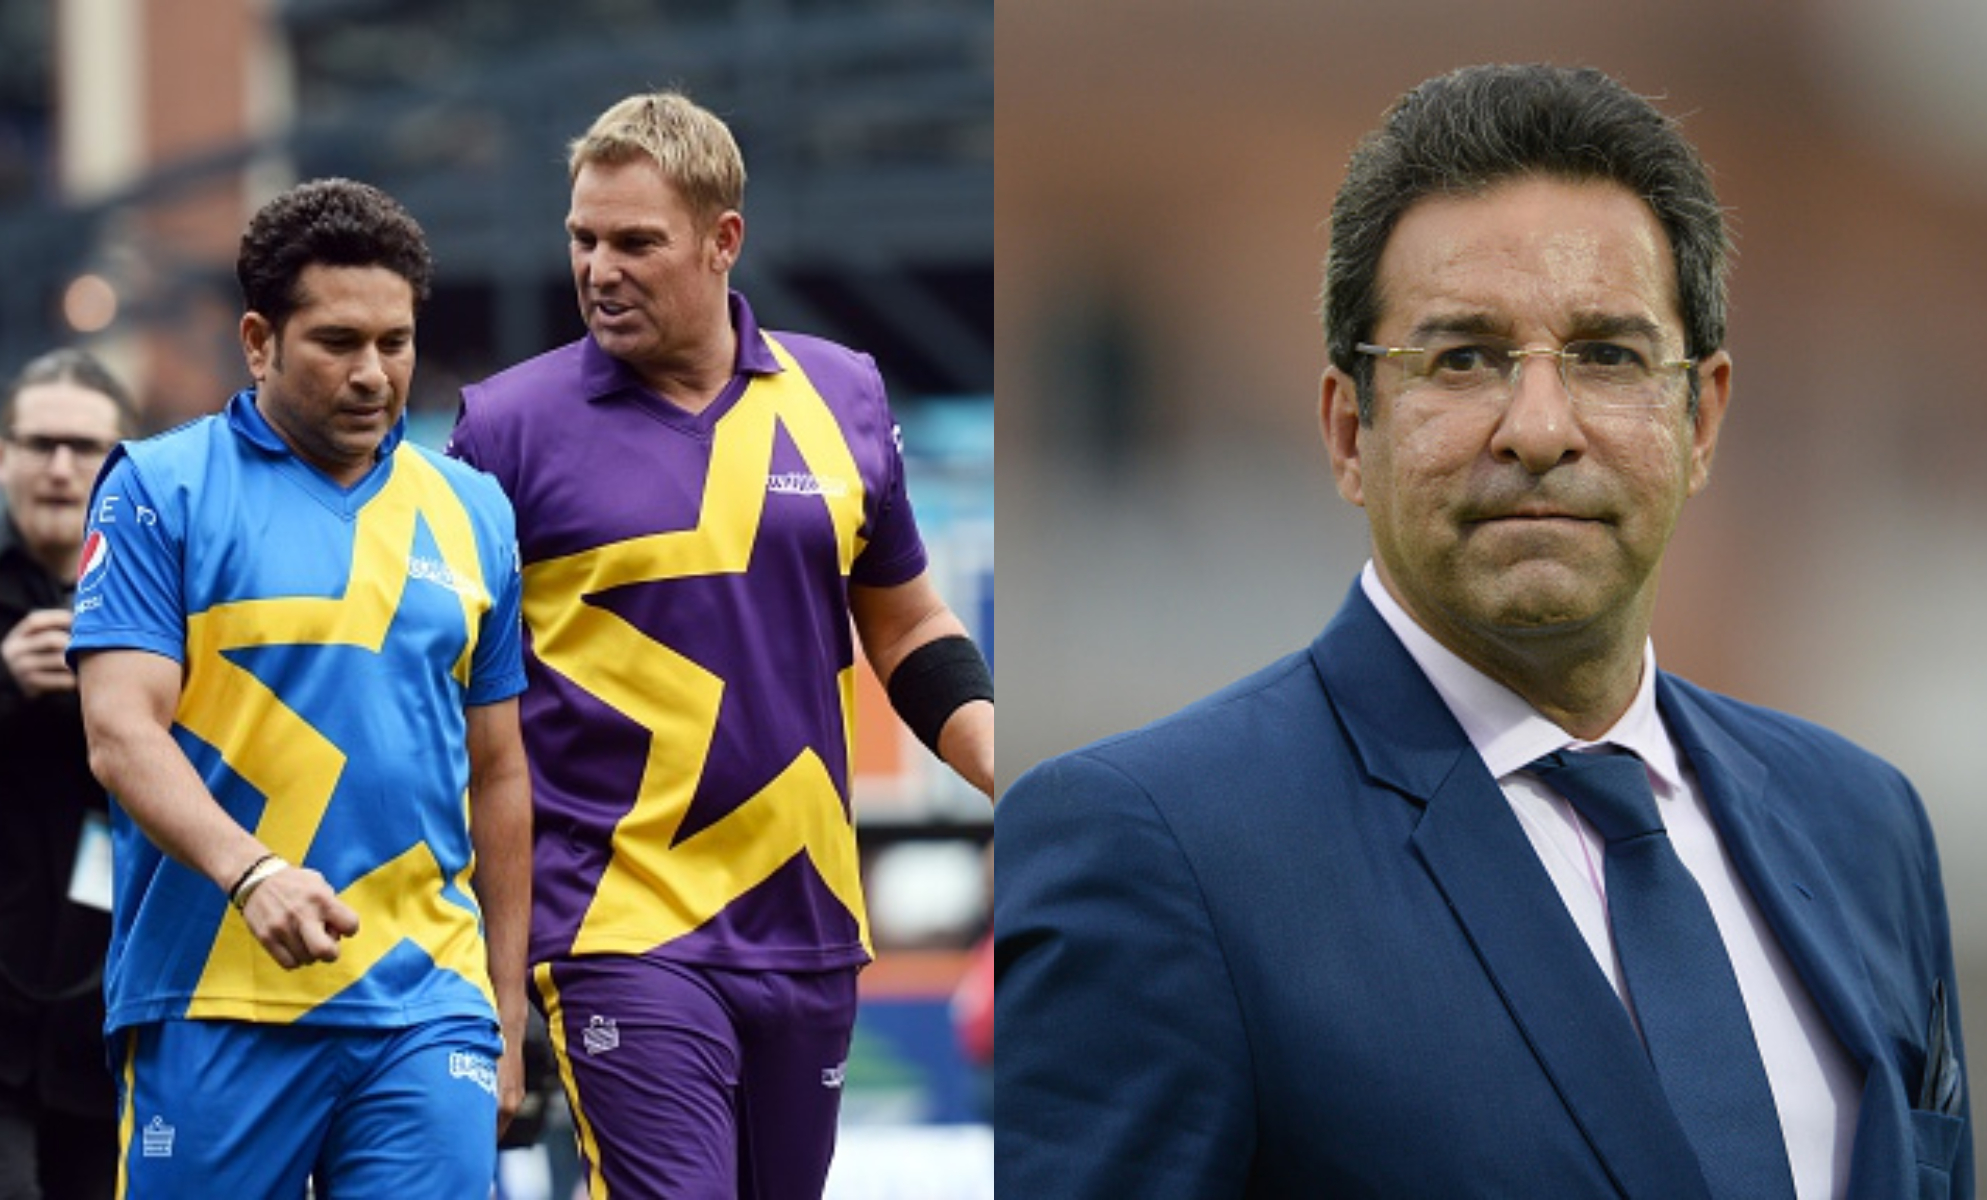 Akhtar named Sachin Tendulkar, Wasim Akram and Shane Warne as tha GOATs of cricket | Getty